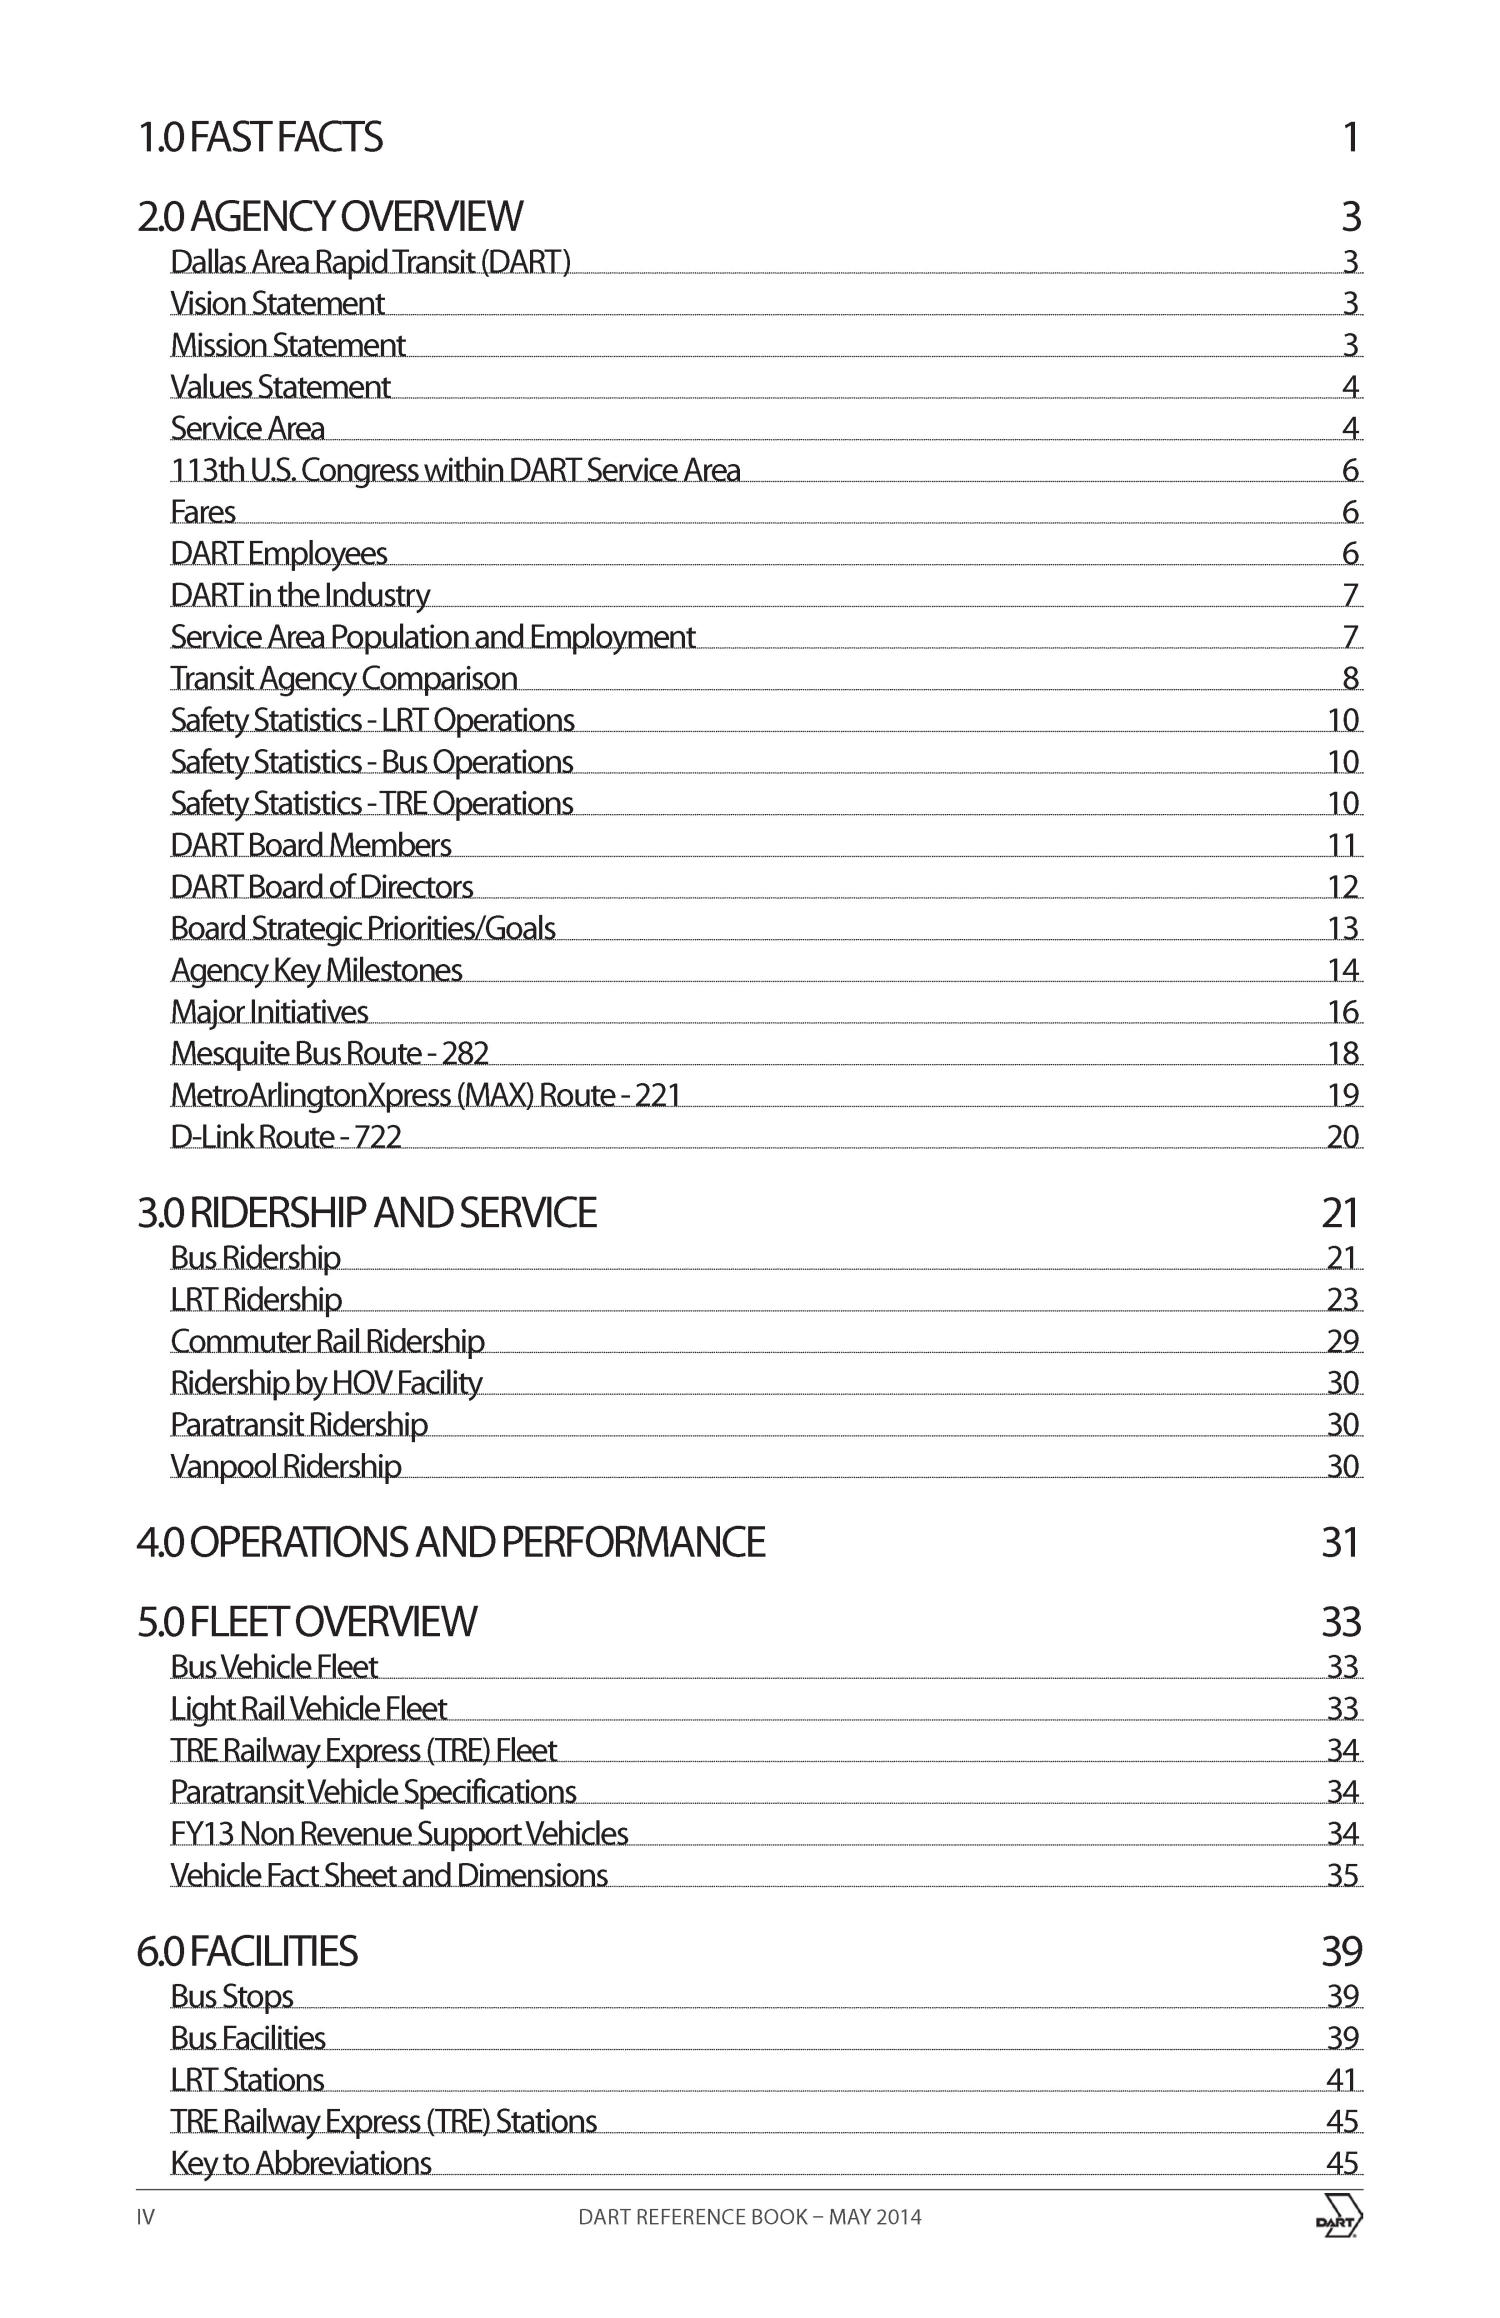 Dallas Area Rapid Transit Reference Book, Version 5.1
                                                
                                                    IV
                                                